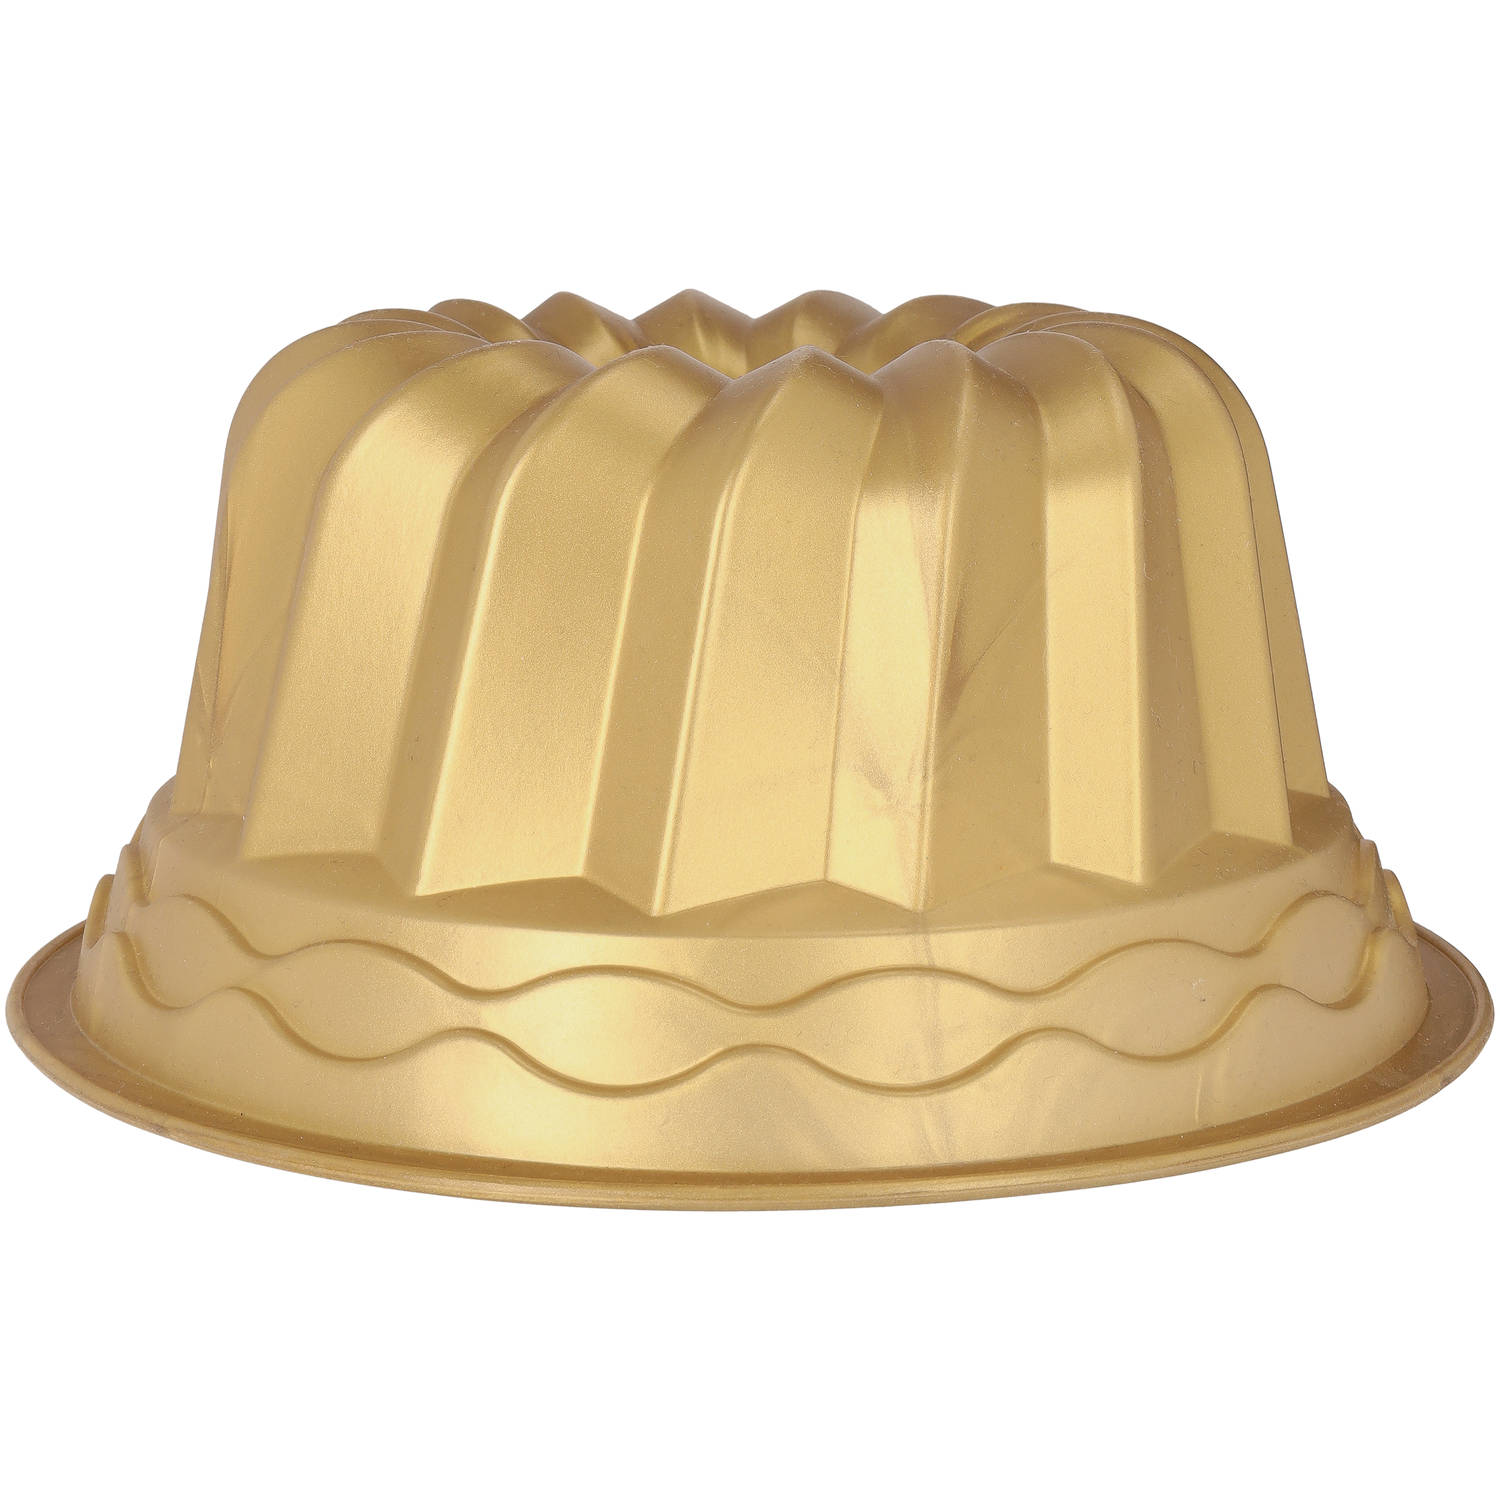 Blokker Jolly Christmas tulbandvorm siliconen goud